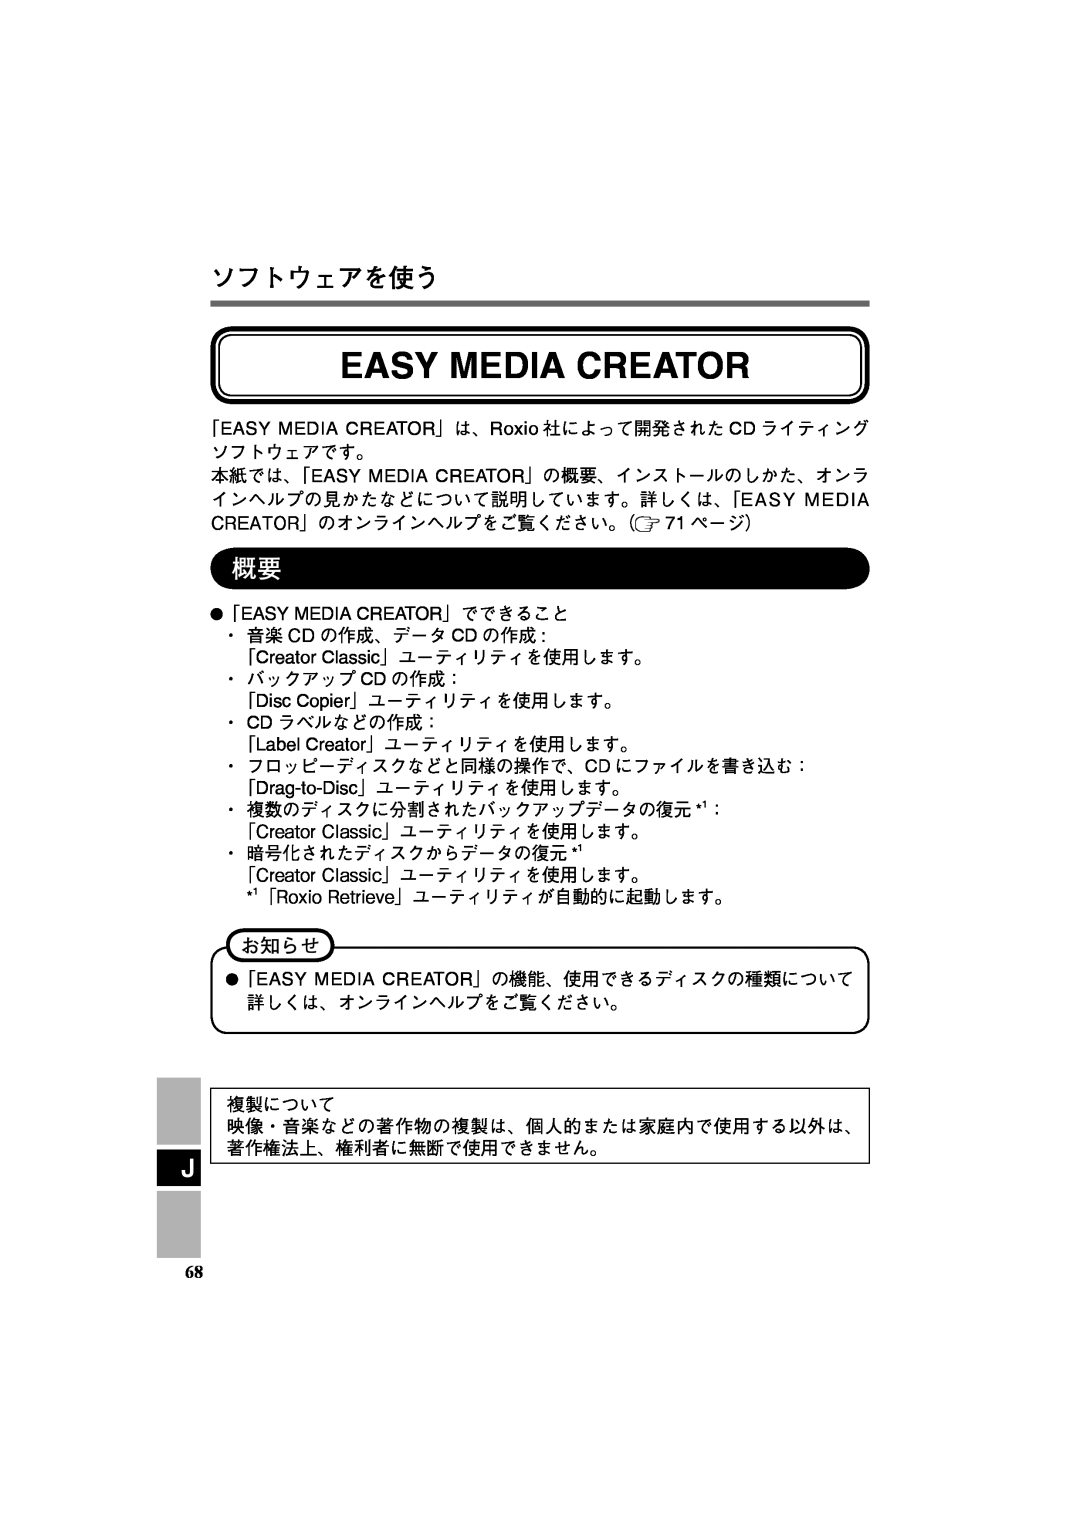 Panasonic CF-VDR301U specifications ソフトウェアを使う, Easy Media Creator, お知らせ 